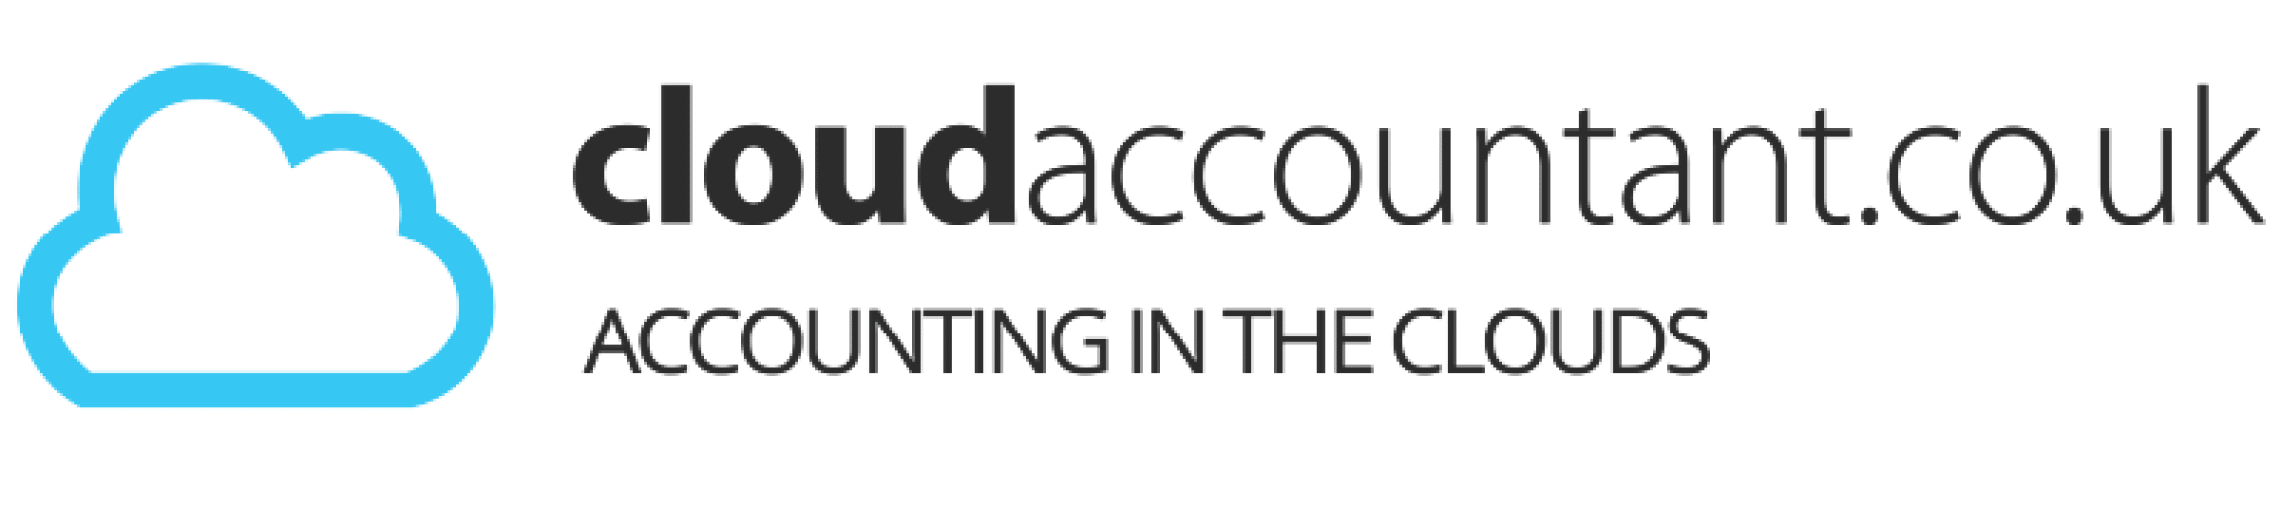 The CloudAccountant logo. It read 'CloudAccountant.co.uk - Accounting in the clouds.'